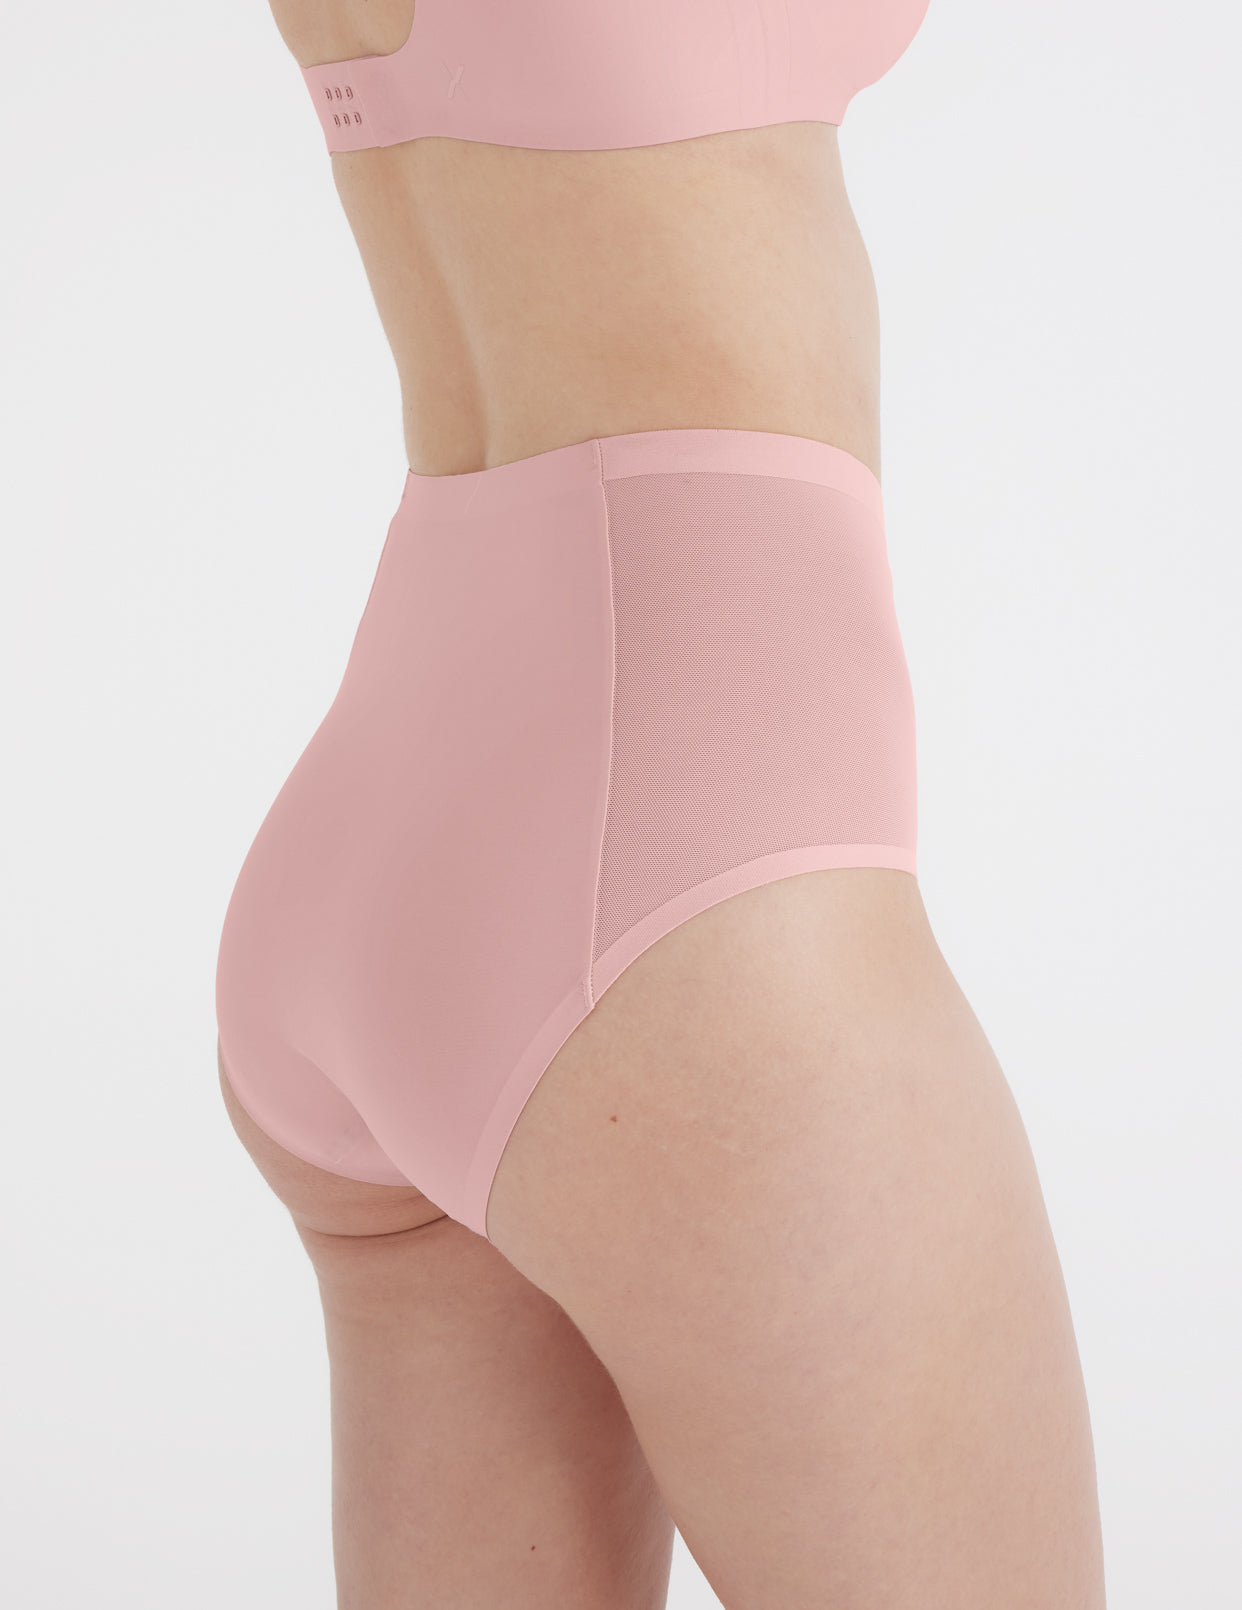  KNIX Shadow Mesh Leakproof Thong - Period Underwear